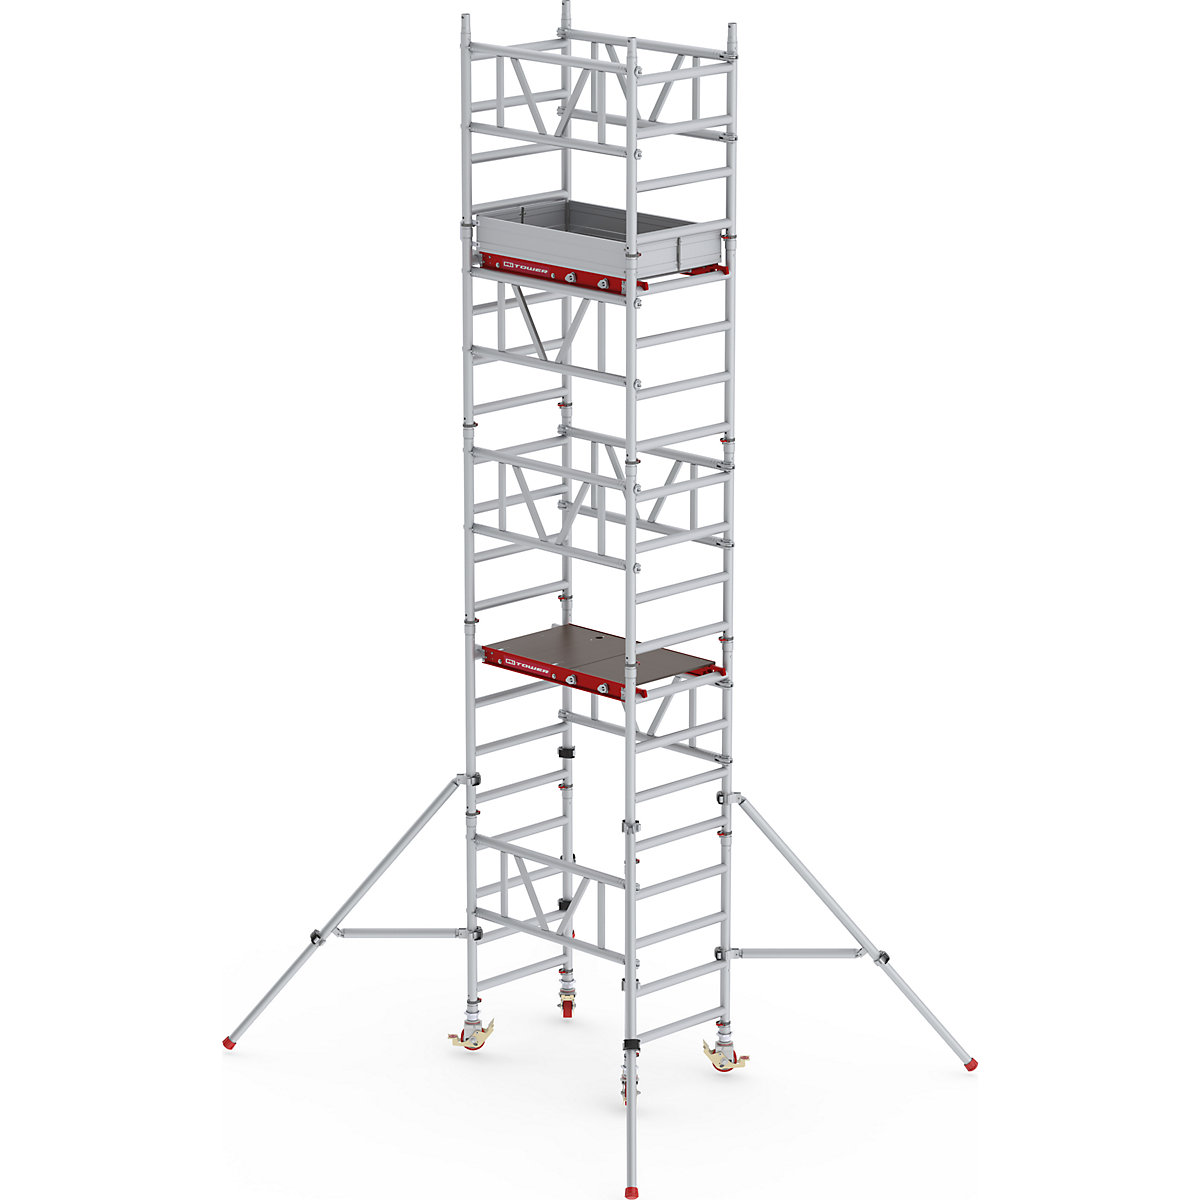 Pomična skela za brzo sastavljanje MiTOWER Standard – Altrex, drvena platforma, DxŠ 1200 x 750 mm, radna visina 6 m-23